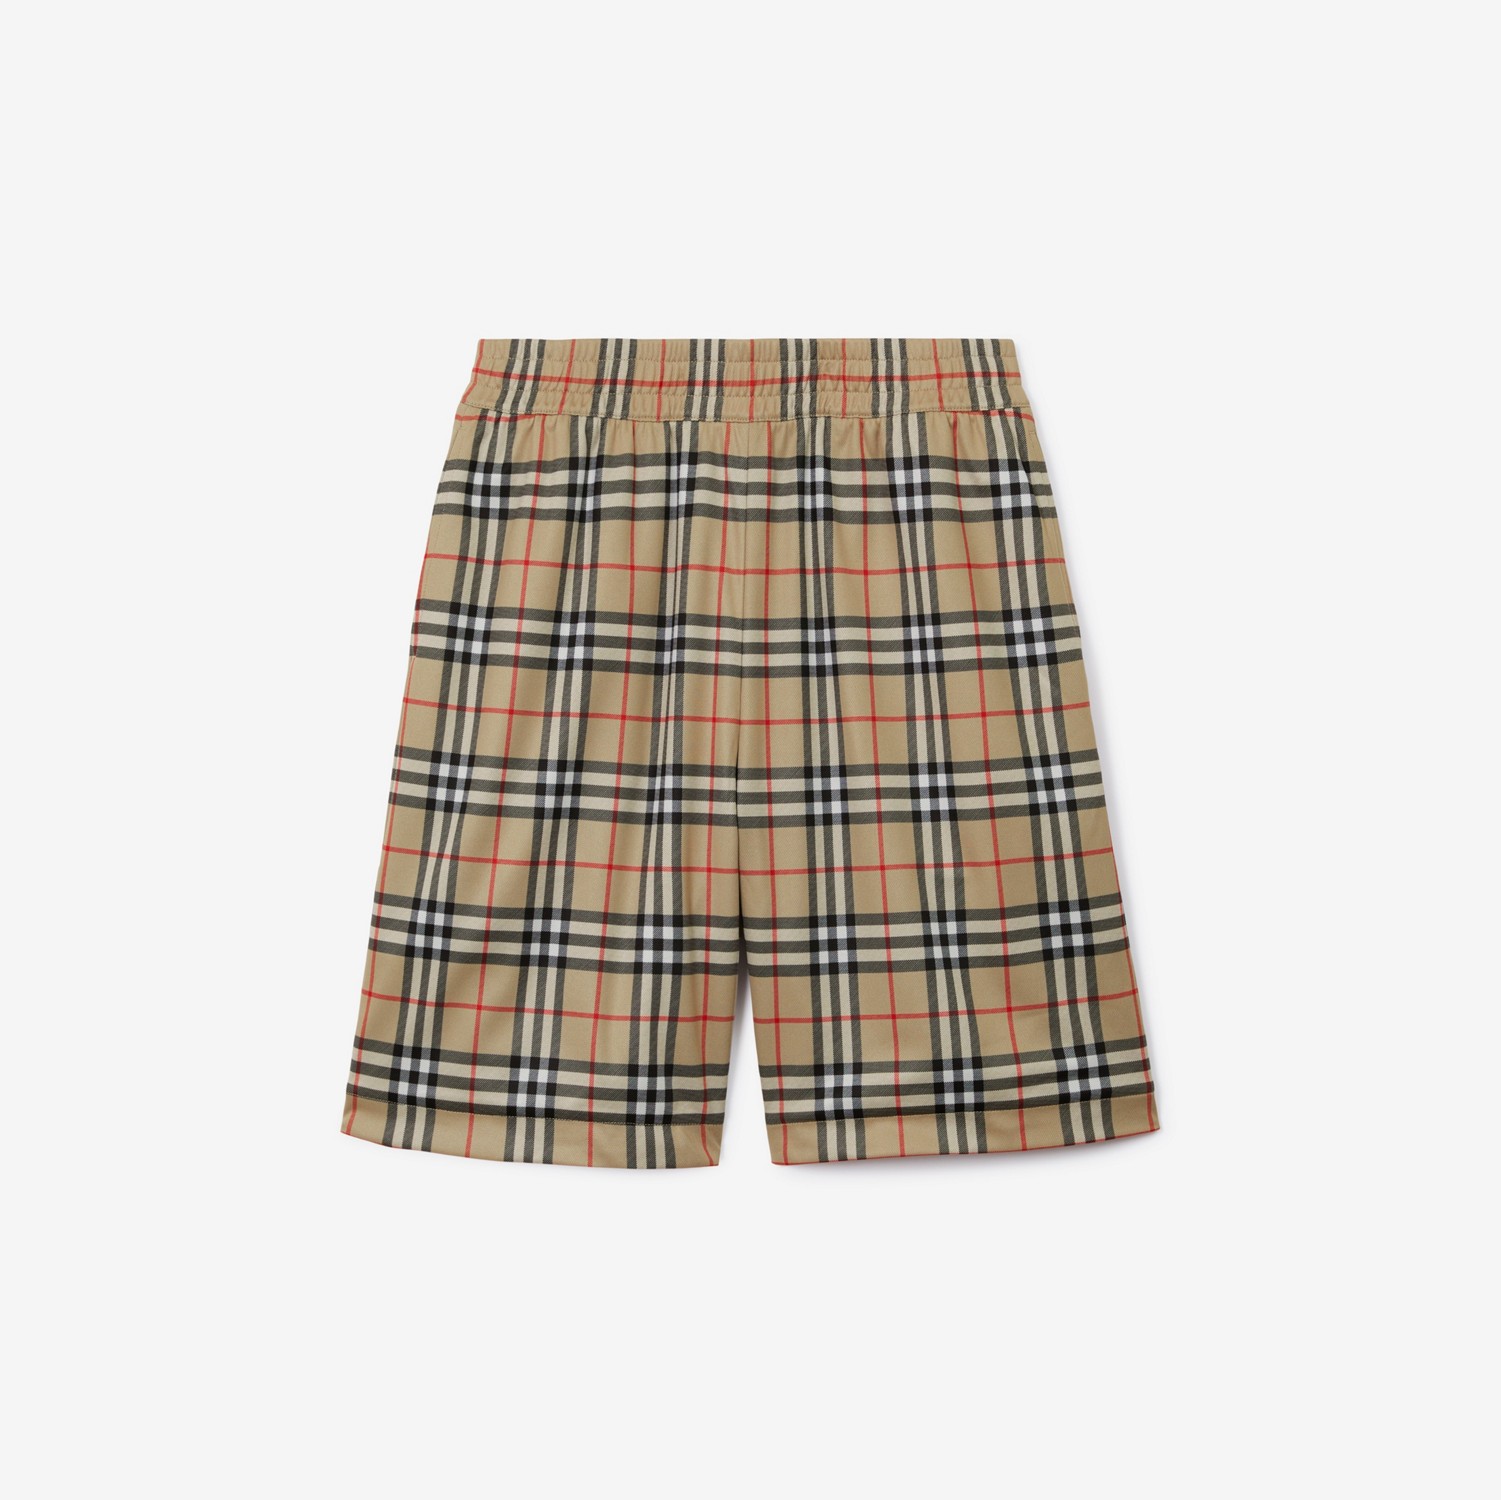 Shorts im Vintage Check-Design